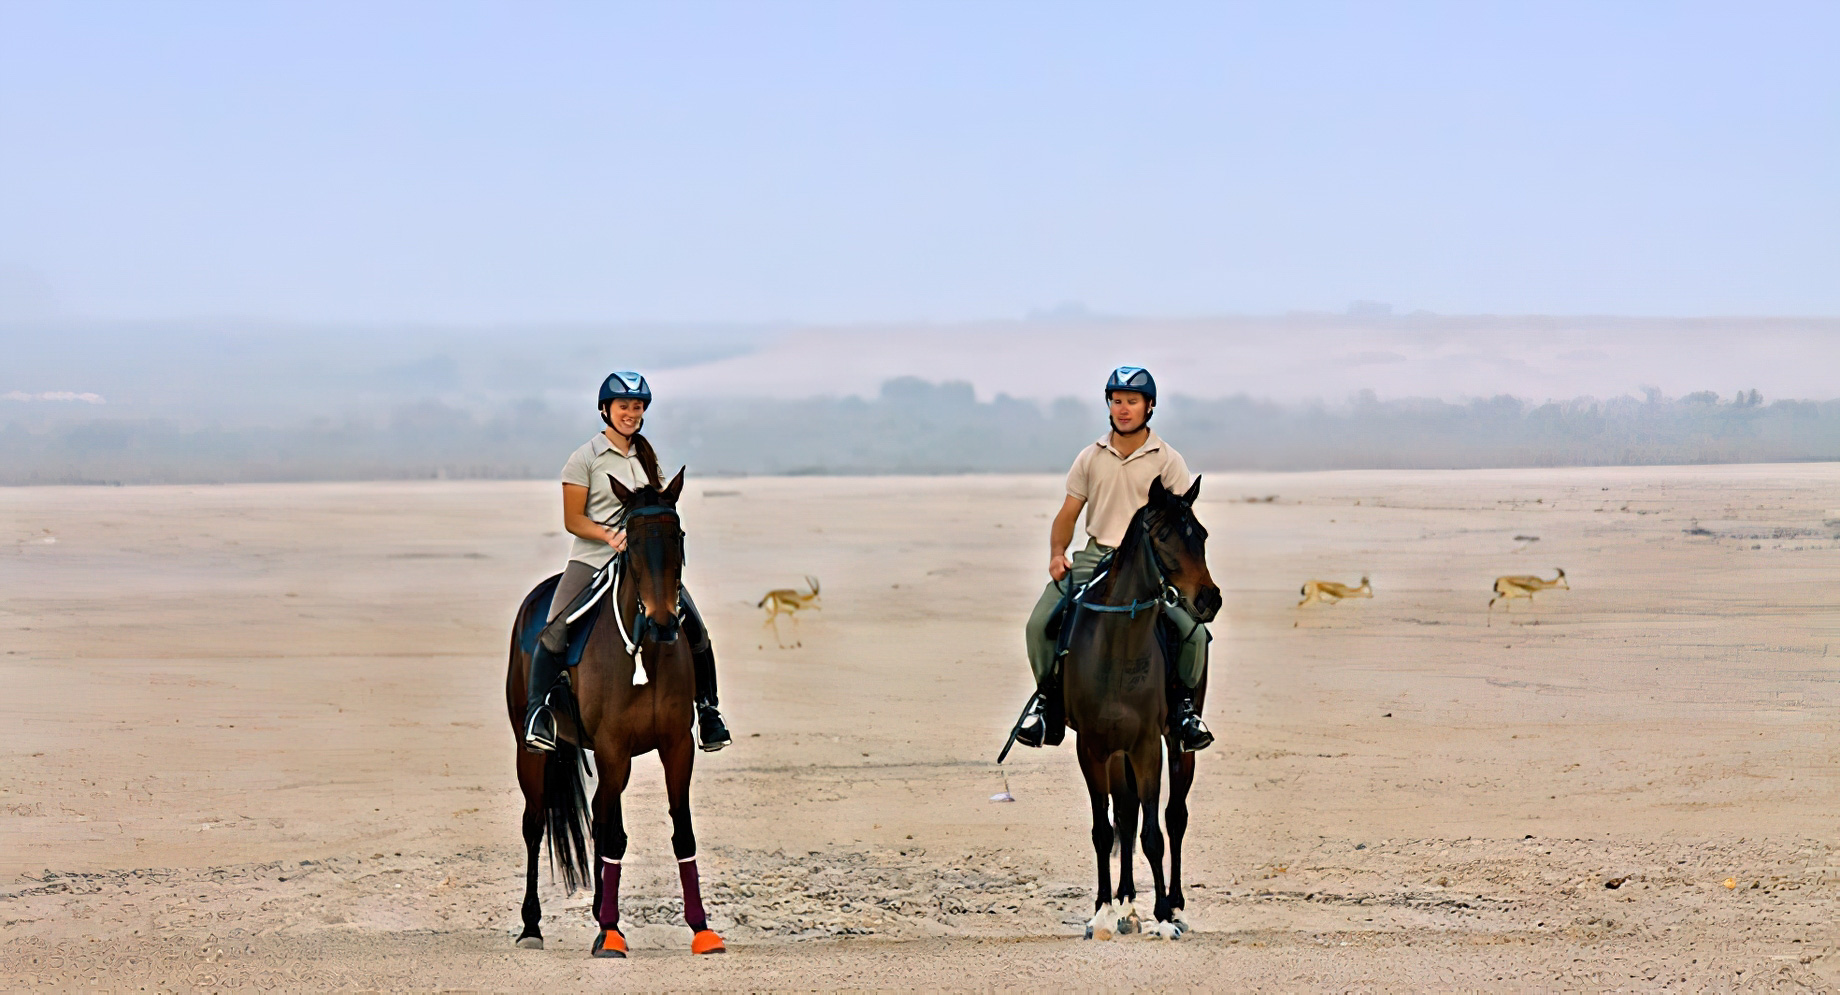 Desert Islands Resort & Spa by Anantara - Abu Dhabi - United Arab Emirates - Horse Ride